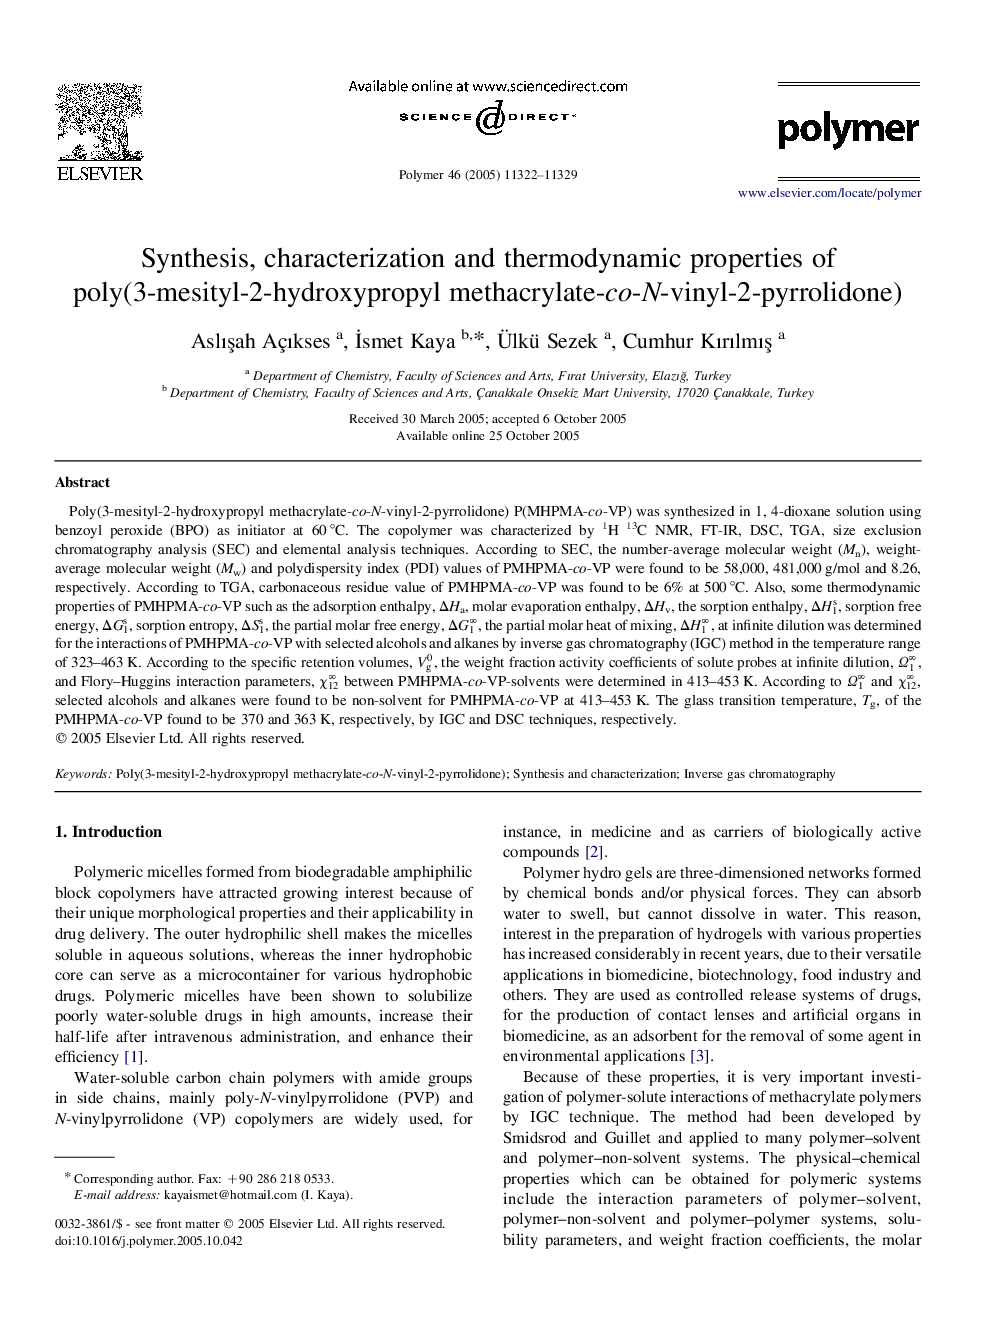 Synthesis, characterization and thermodynamic properties of poly(3-mesityl-2-hydroxypropyl methacrylate-co-N-vinyl-2-pyrrolidone)